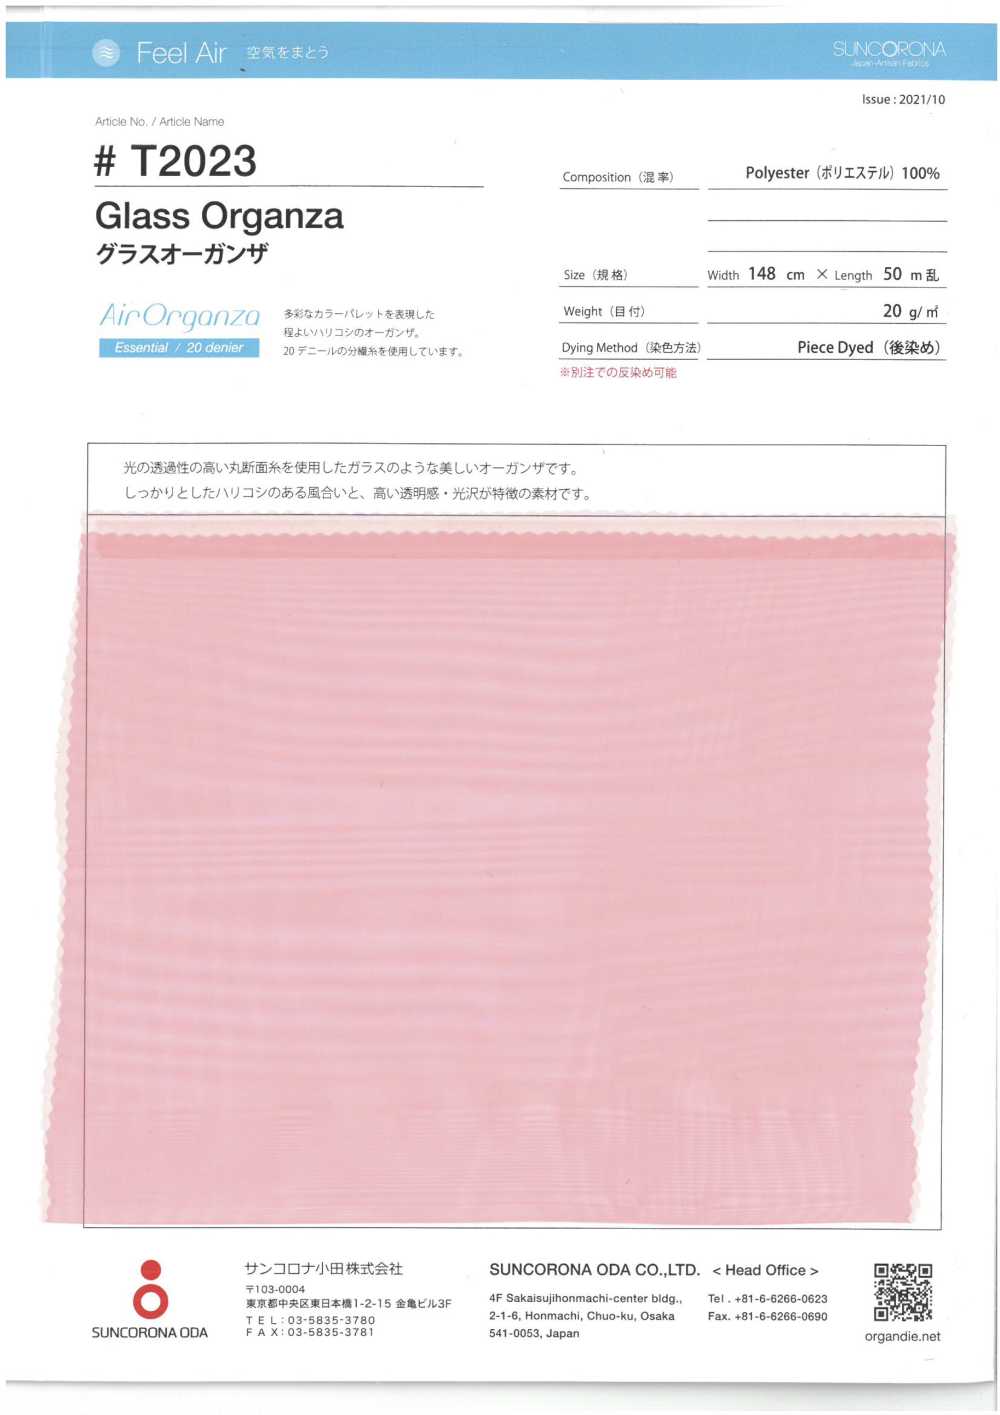 T2023 Glasorganza[Textilgewebe] Suncorona Oda